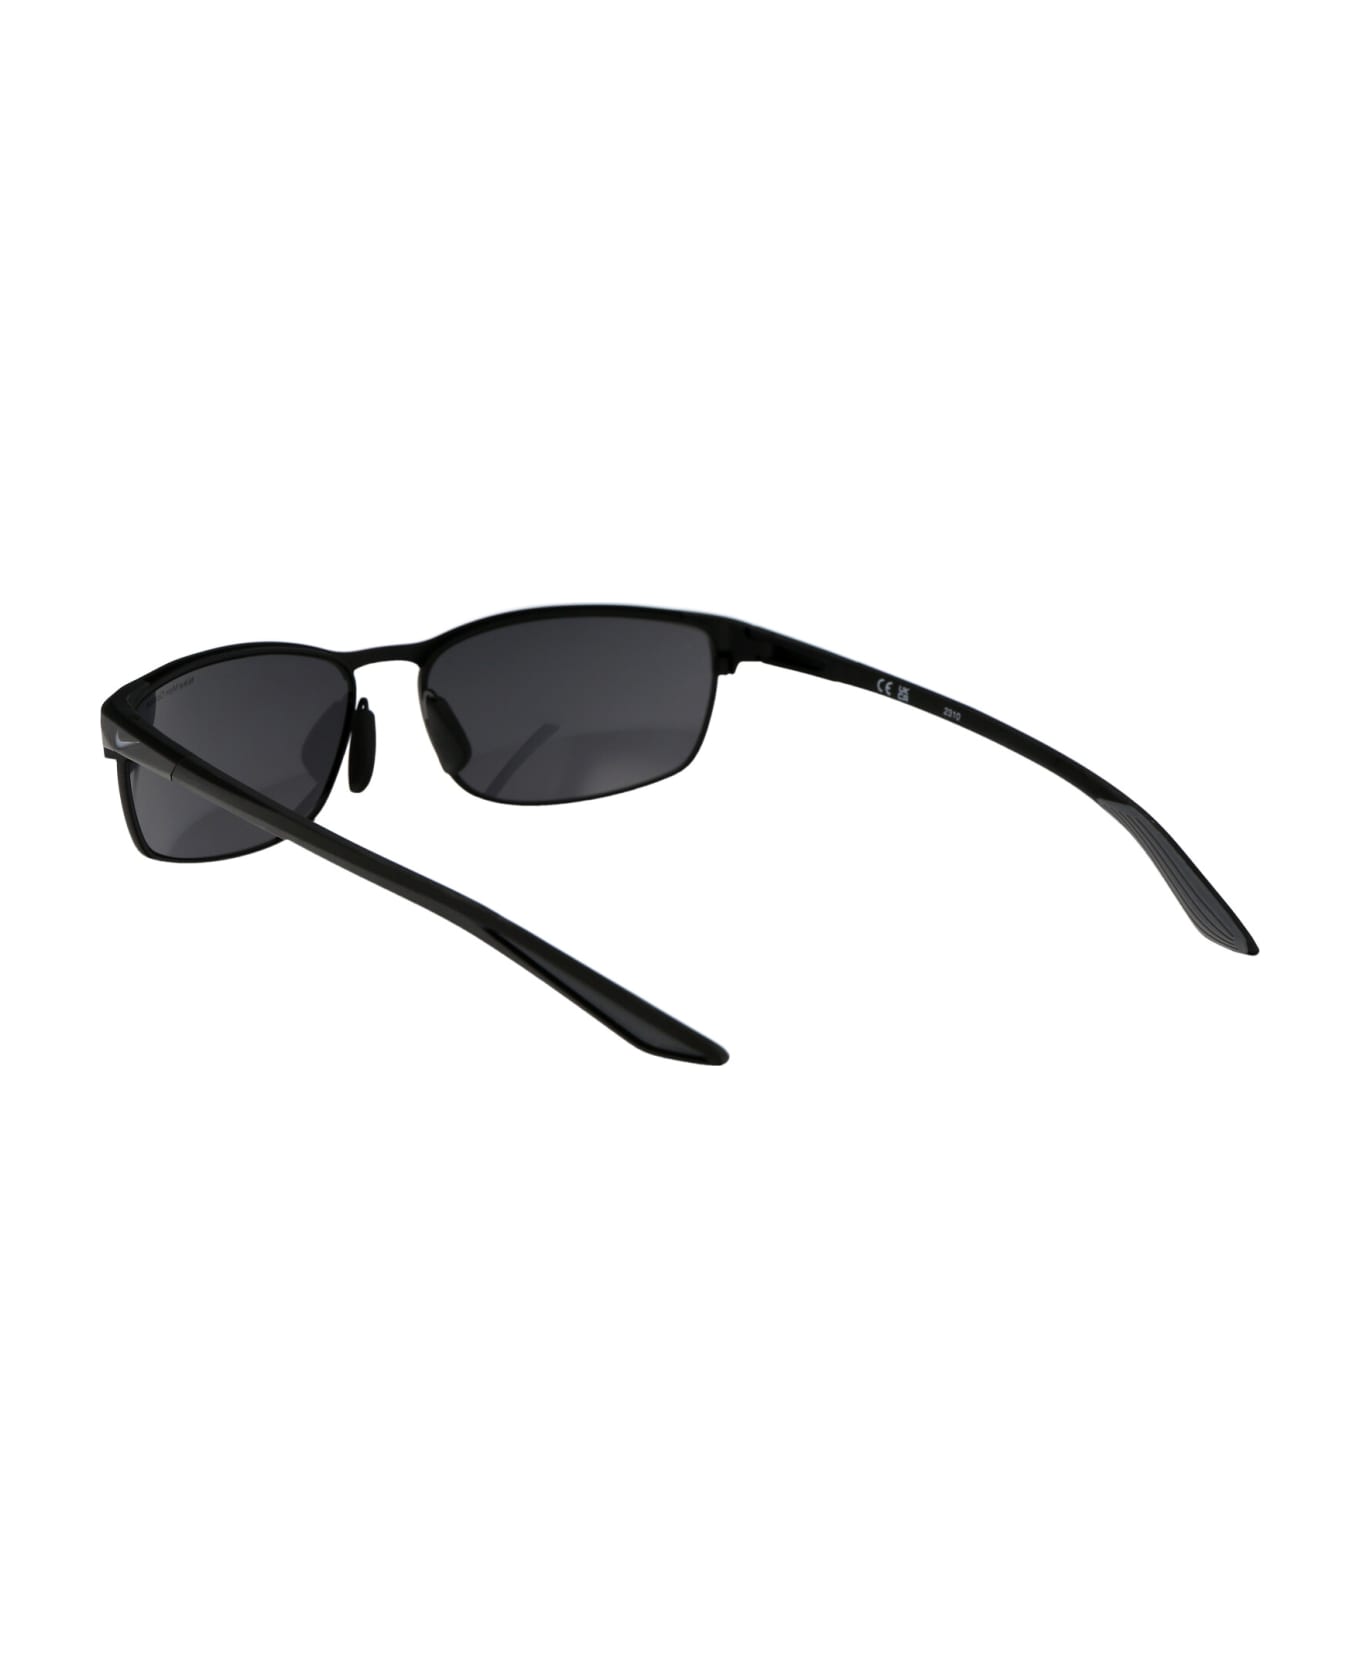 Nike Modern Metal Sunglasses - 010 DARK GREY SATIN BLACK